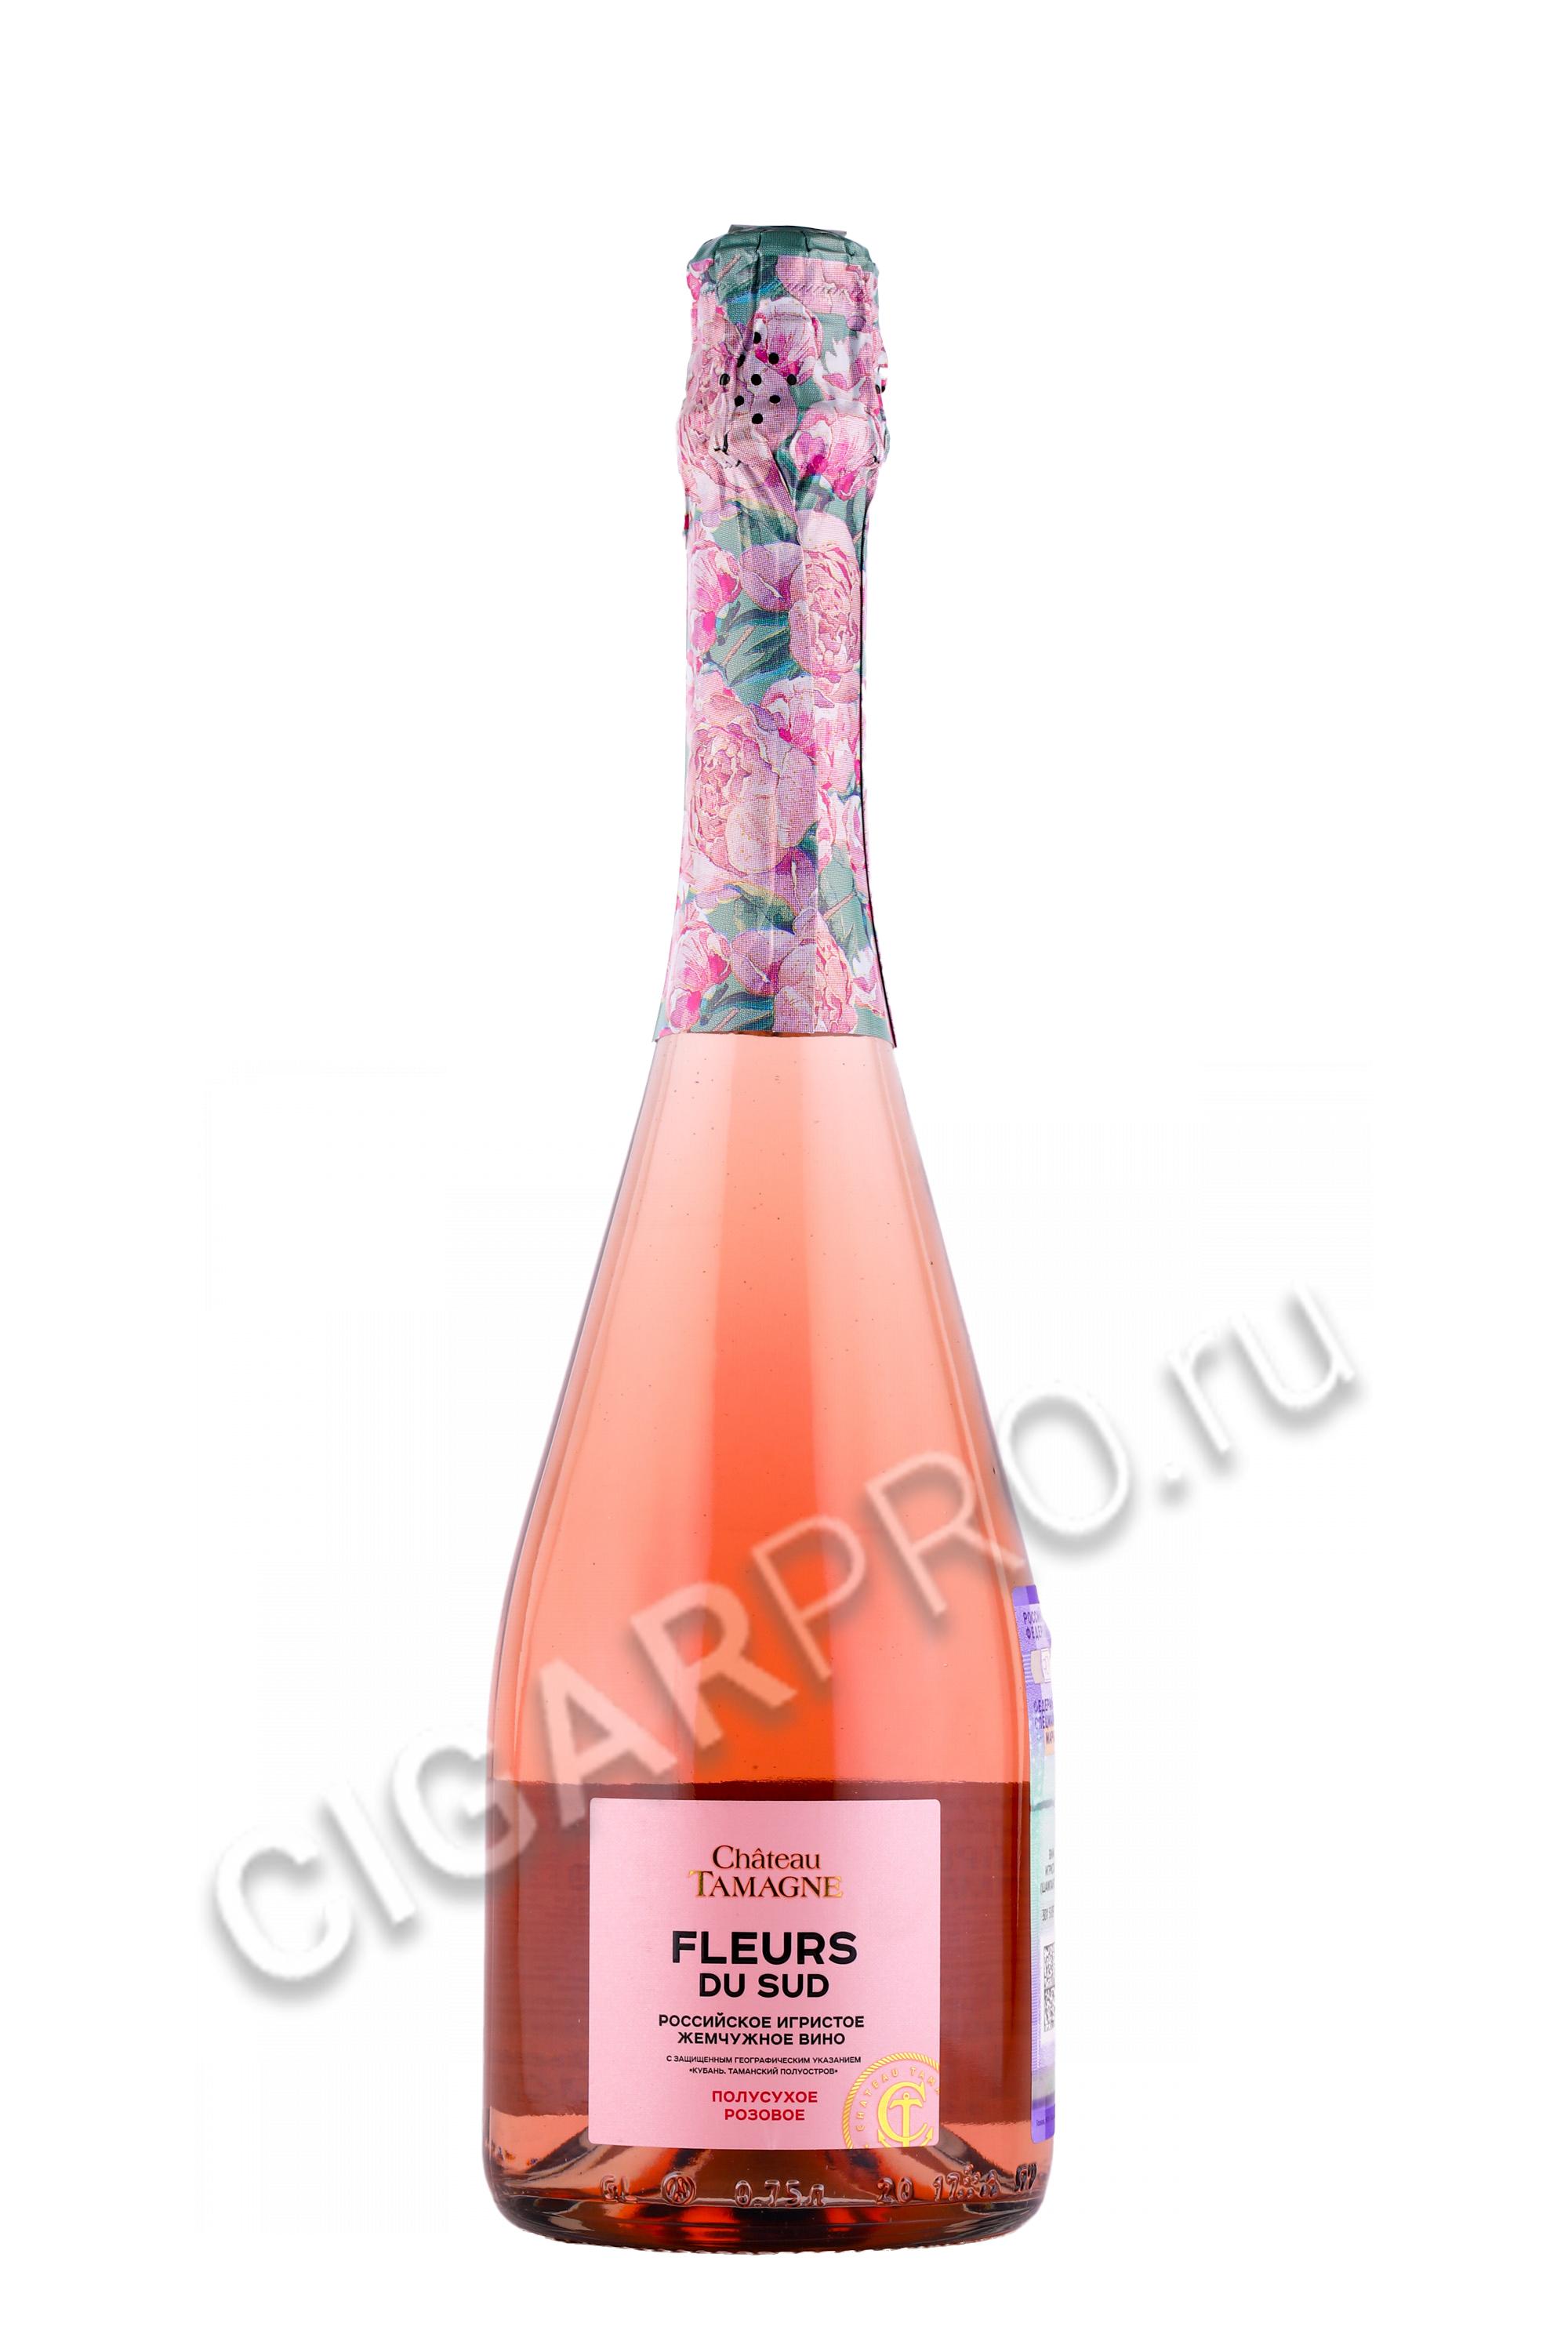 Шато розовое полусухое. Шато Тамань шампанское розовое полусухое. Шато Тамань игристое розовое. Игристое Тамань розовое.